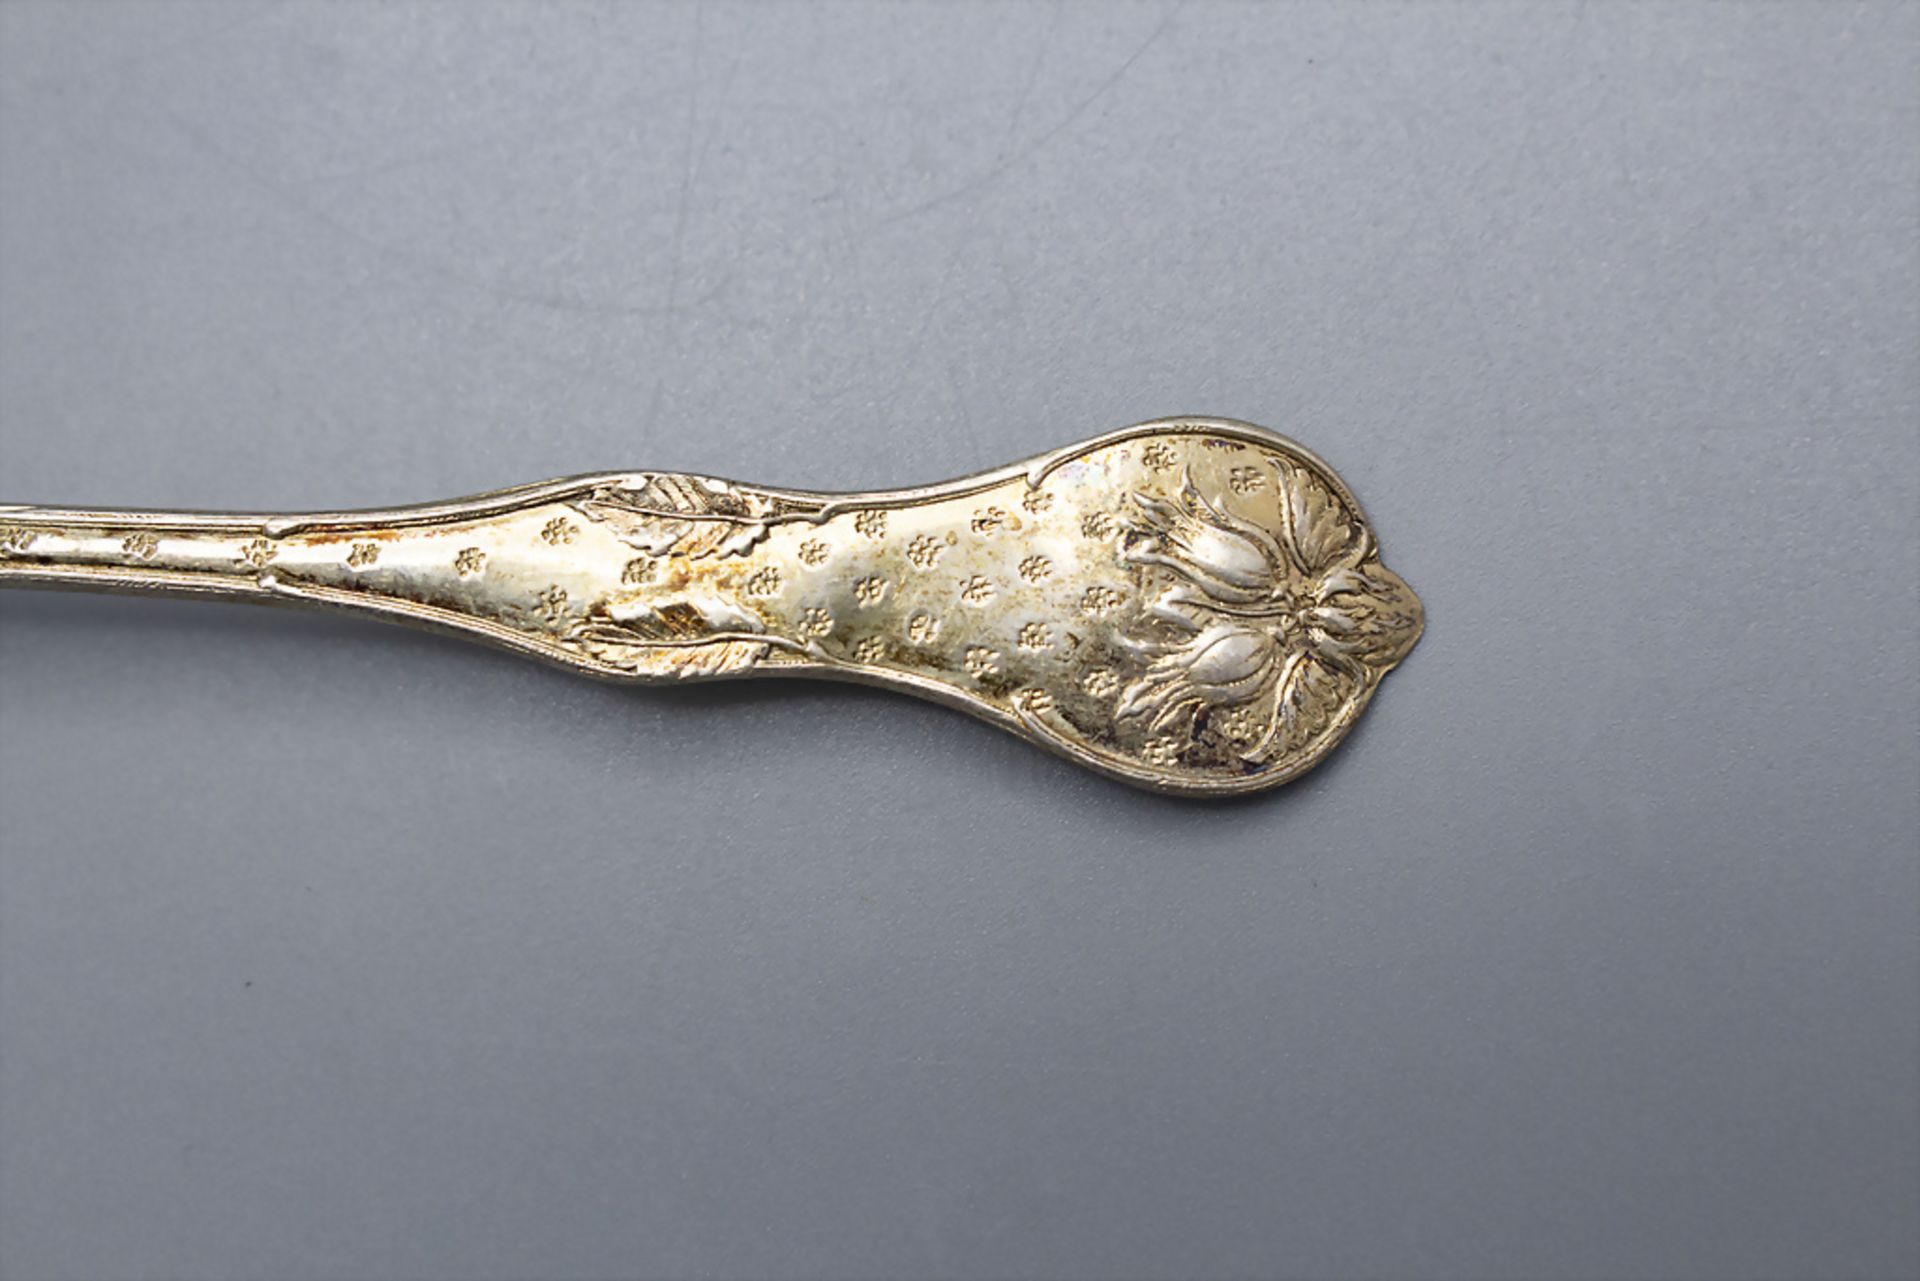 12 Teelöffel / A set of 12 silver tea spoons, Paris, um 1860 - Image 3 of 5